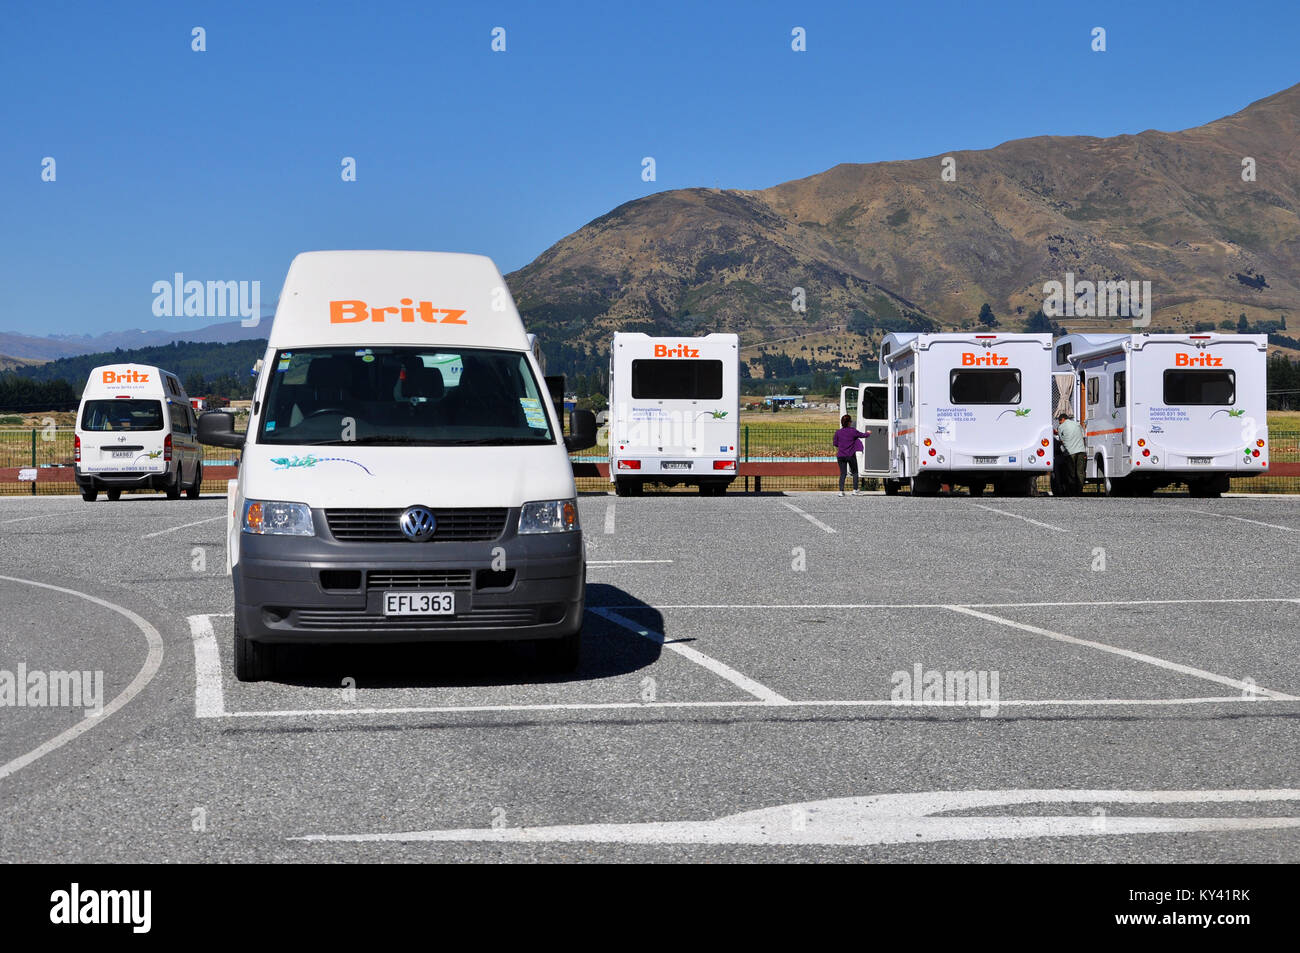 Britz motorhomes campervans motor homes camper vans parked in an attraction car park in Wanaka, Otago, New Zealand. Puzzling World carpark Stock Photo